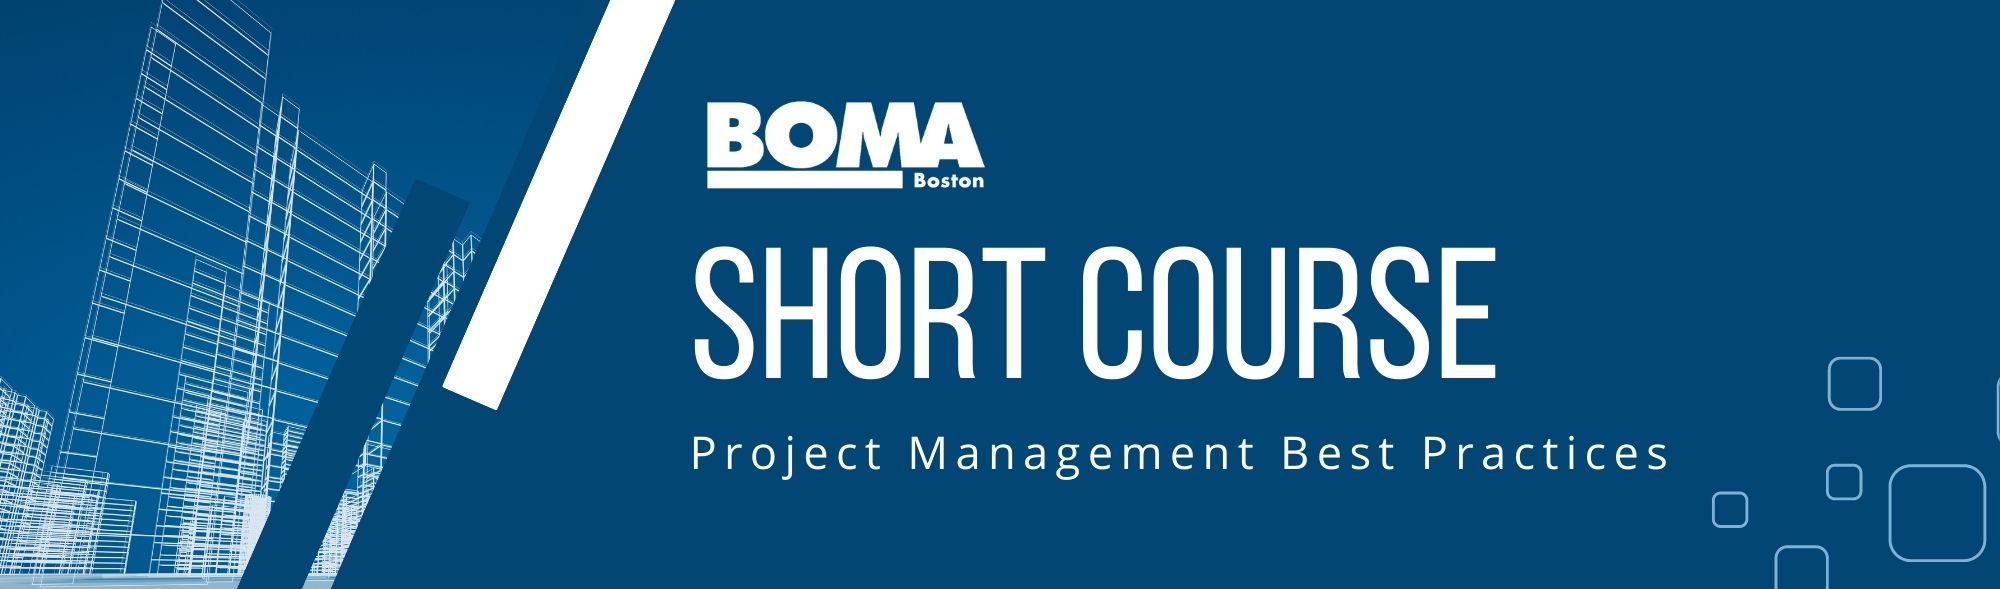 BOMA Short Course: Project Management Best Practices